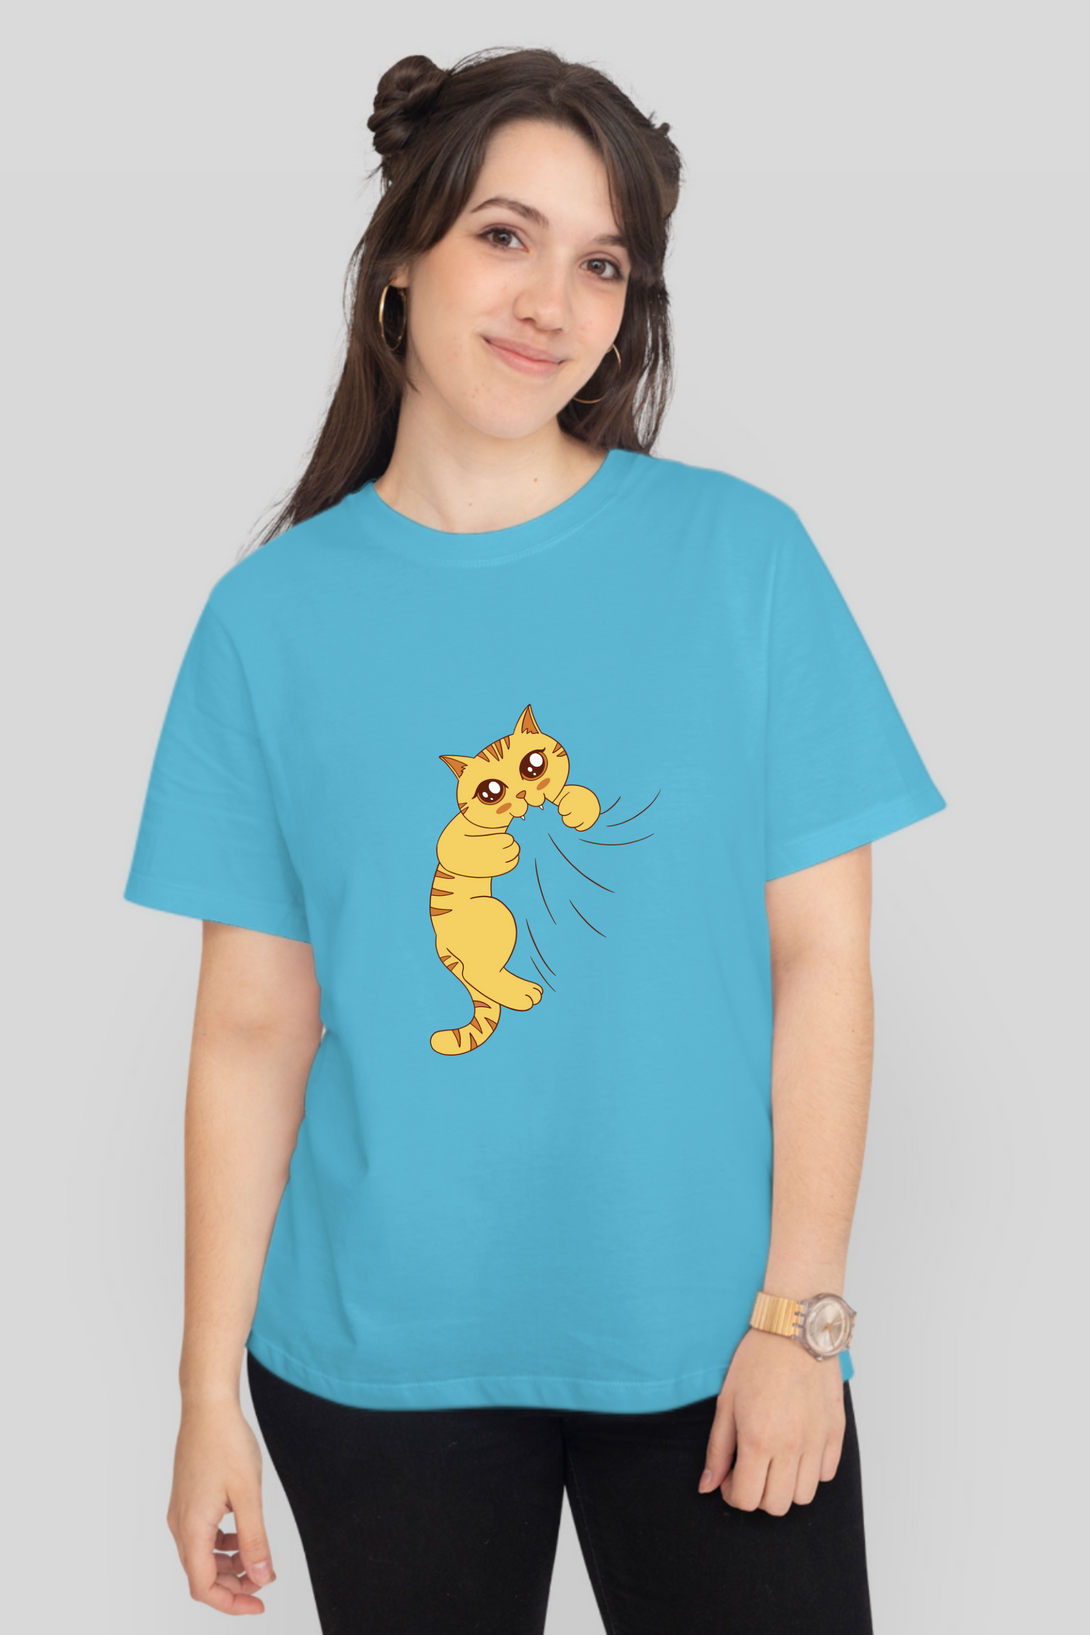 Cat Biting Printed T-Shirt For Women - WowWaves - 8